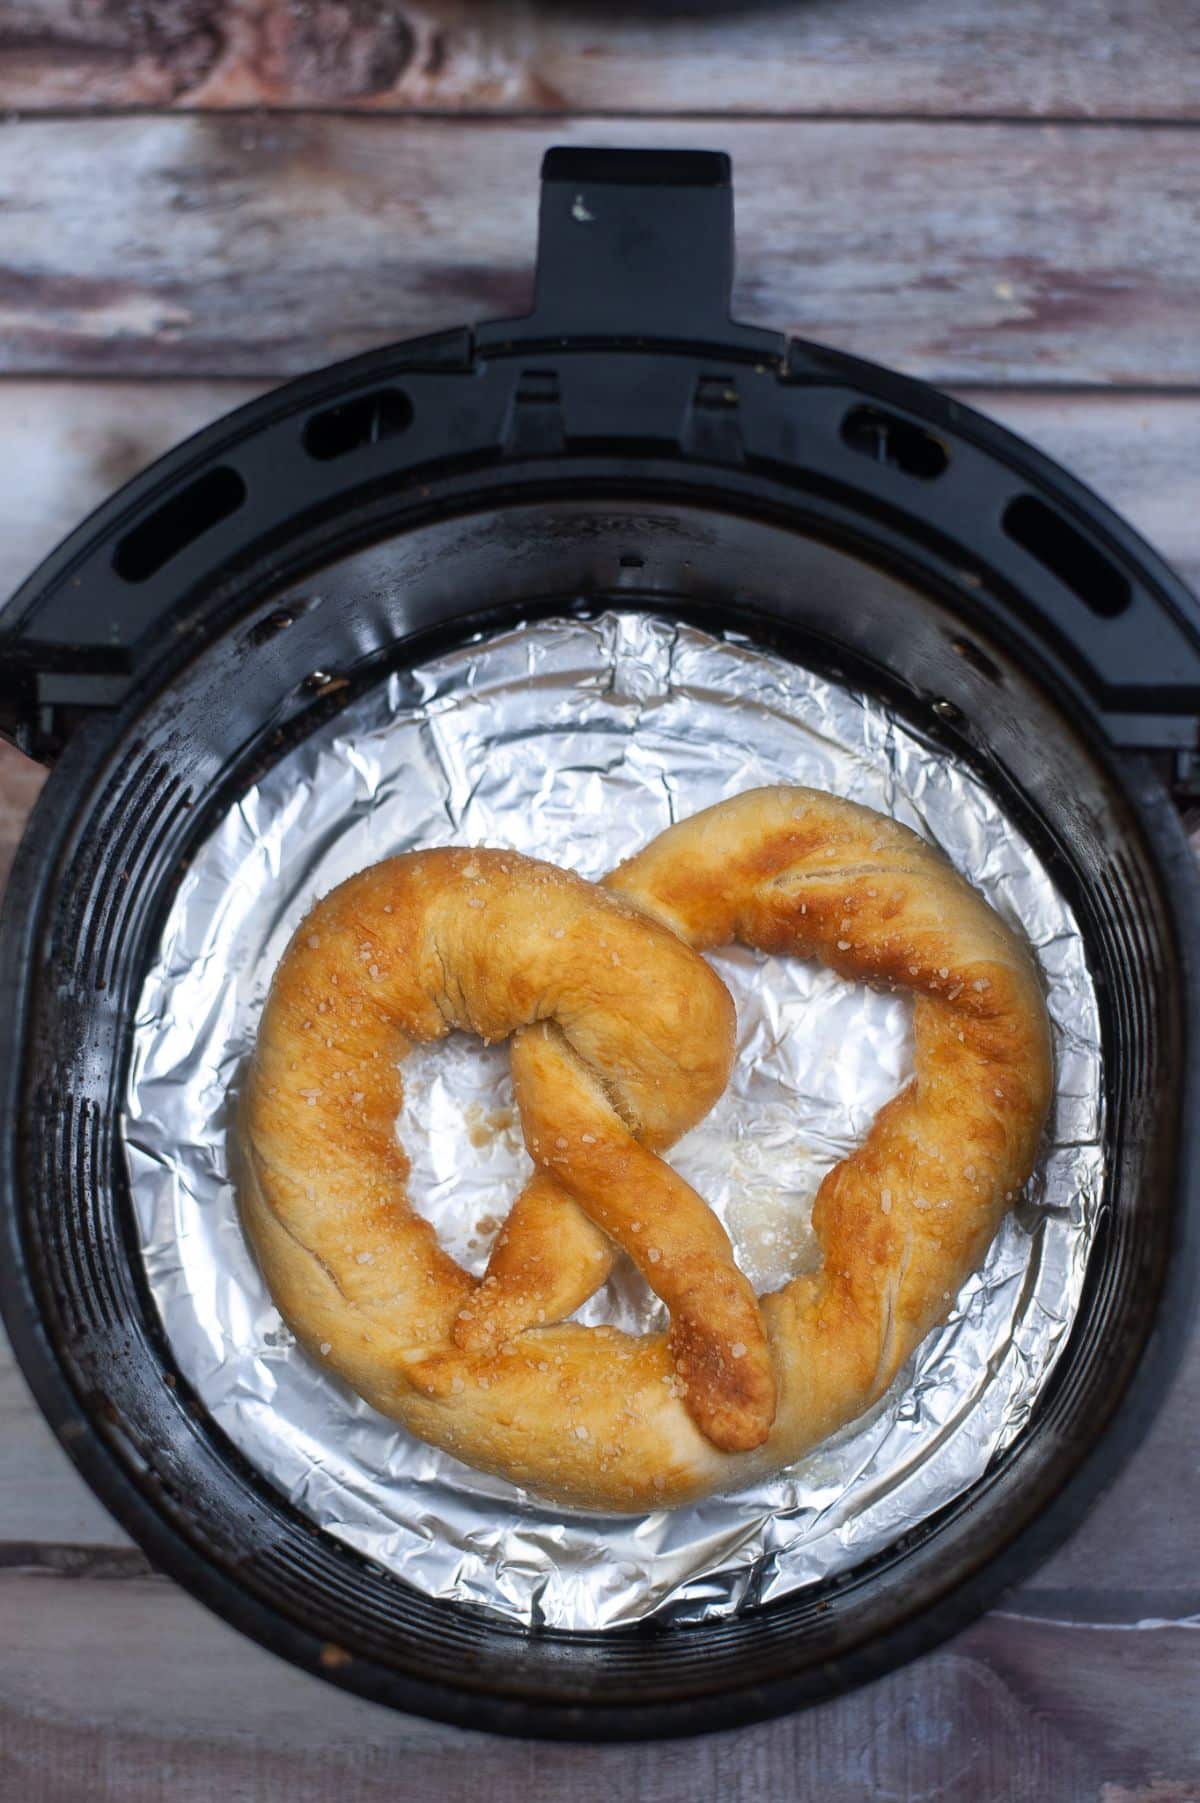 Cooked pretzel inside the Air Fryer with aluminum foil.